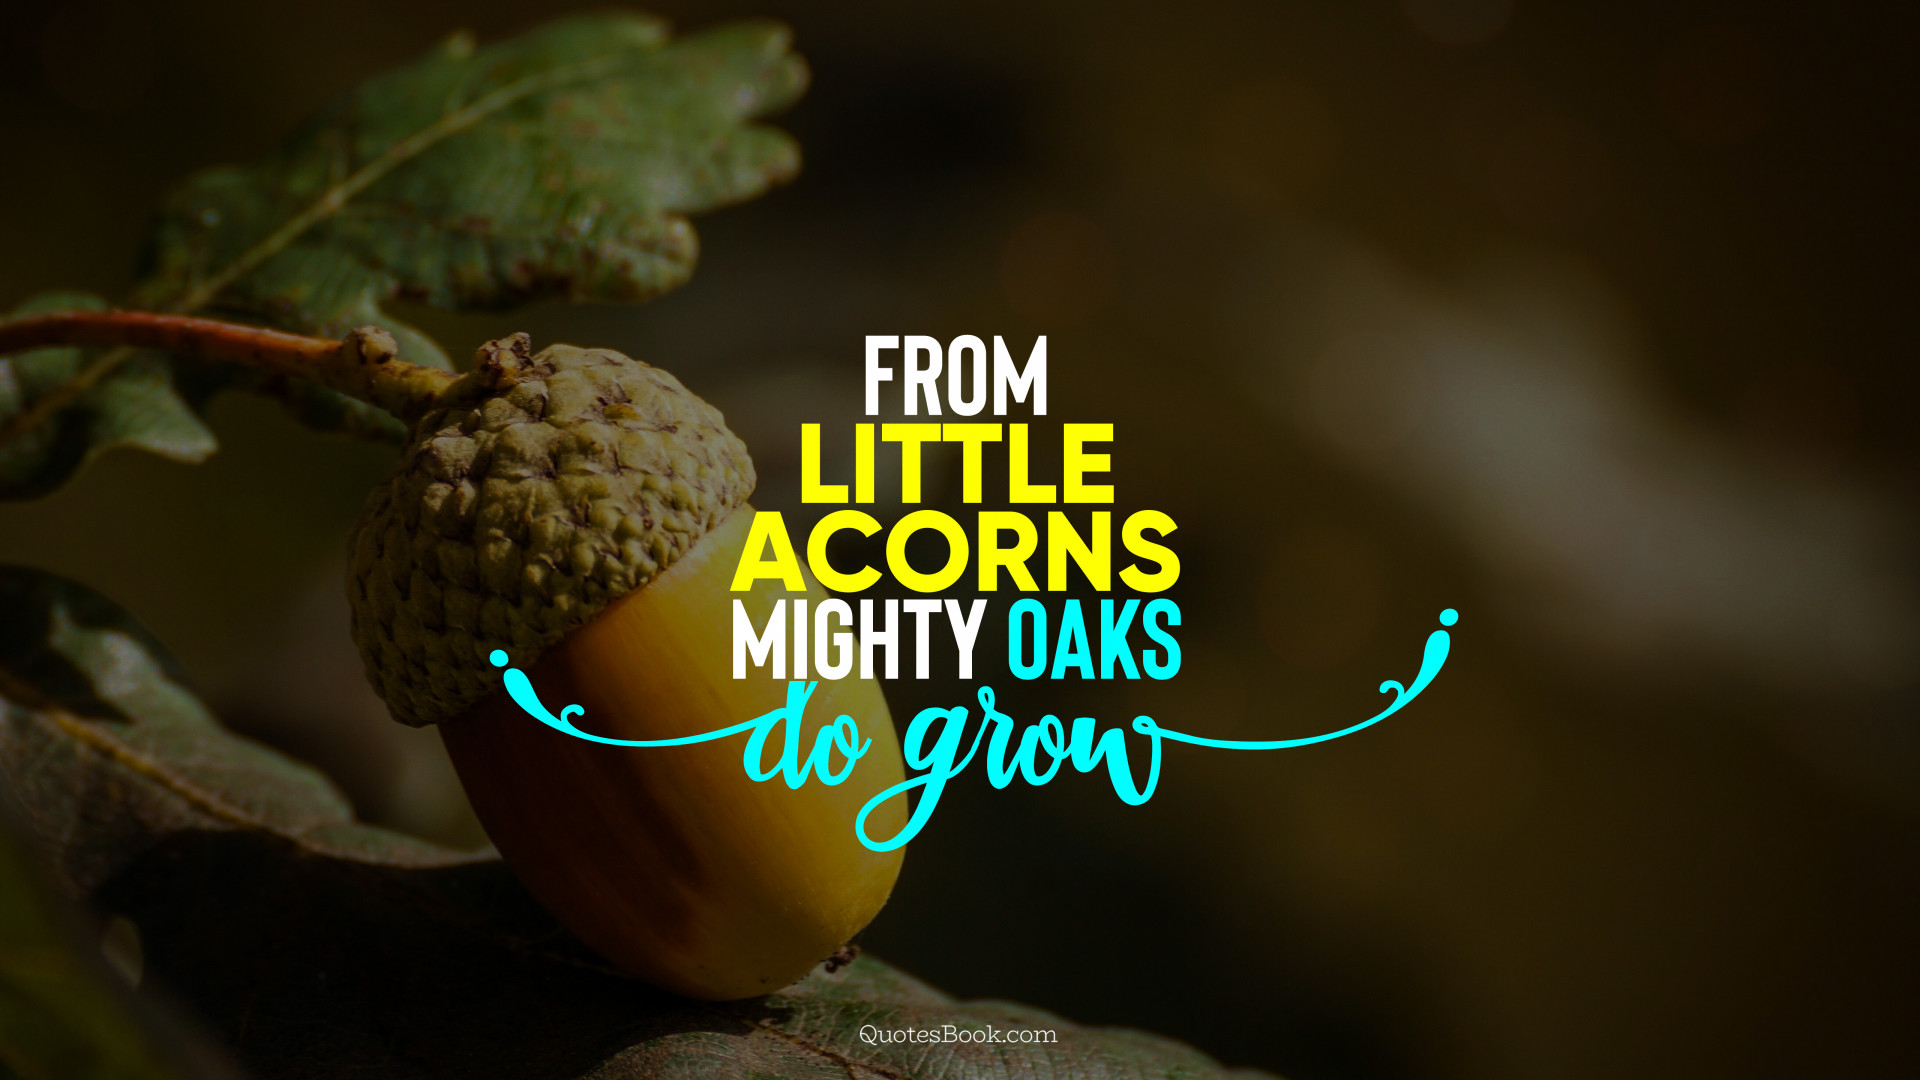 from little acorns mighty oaks do grow 1920x1080 4634